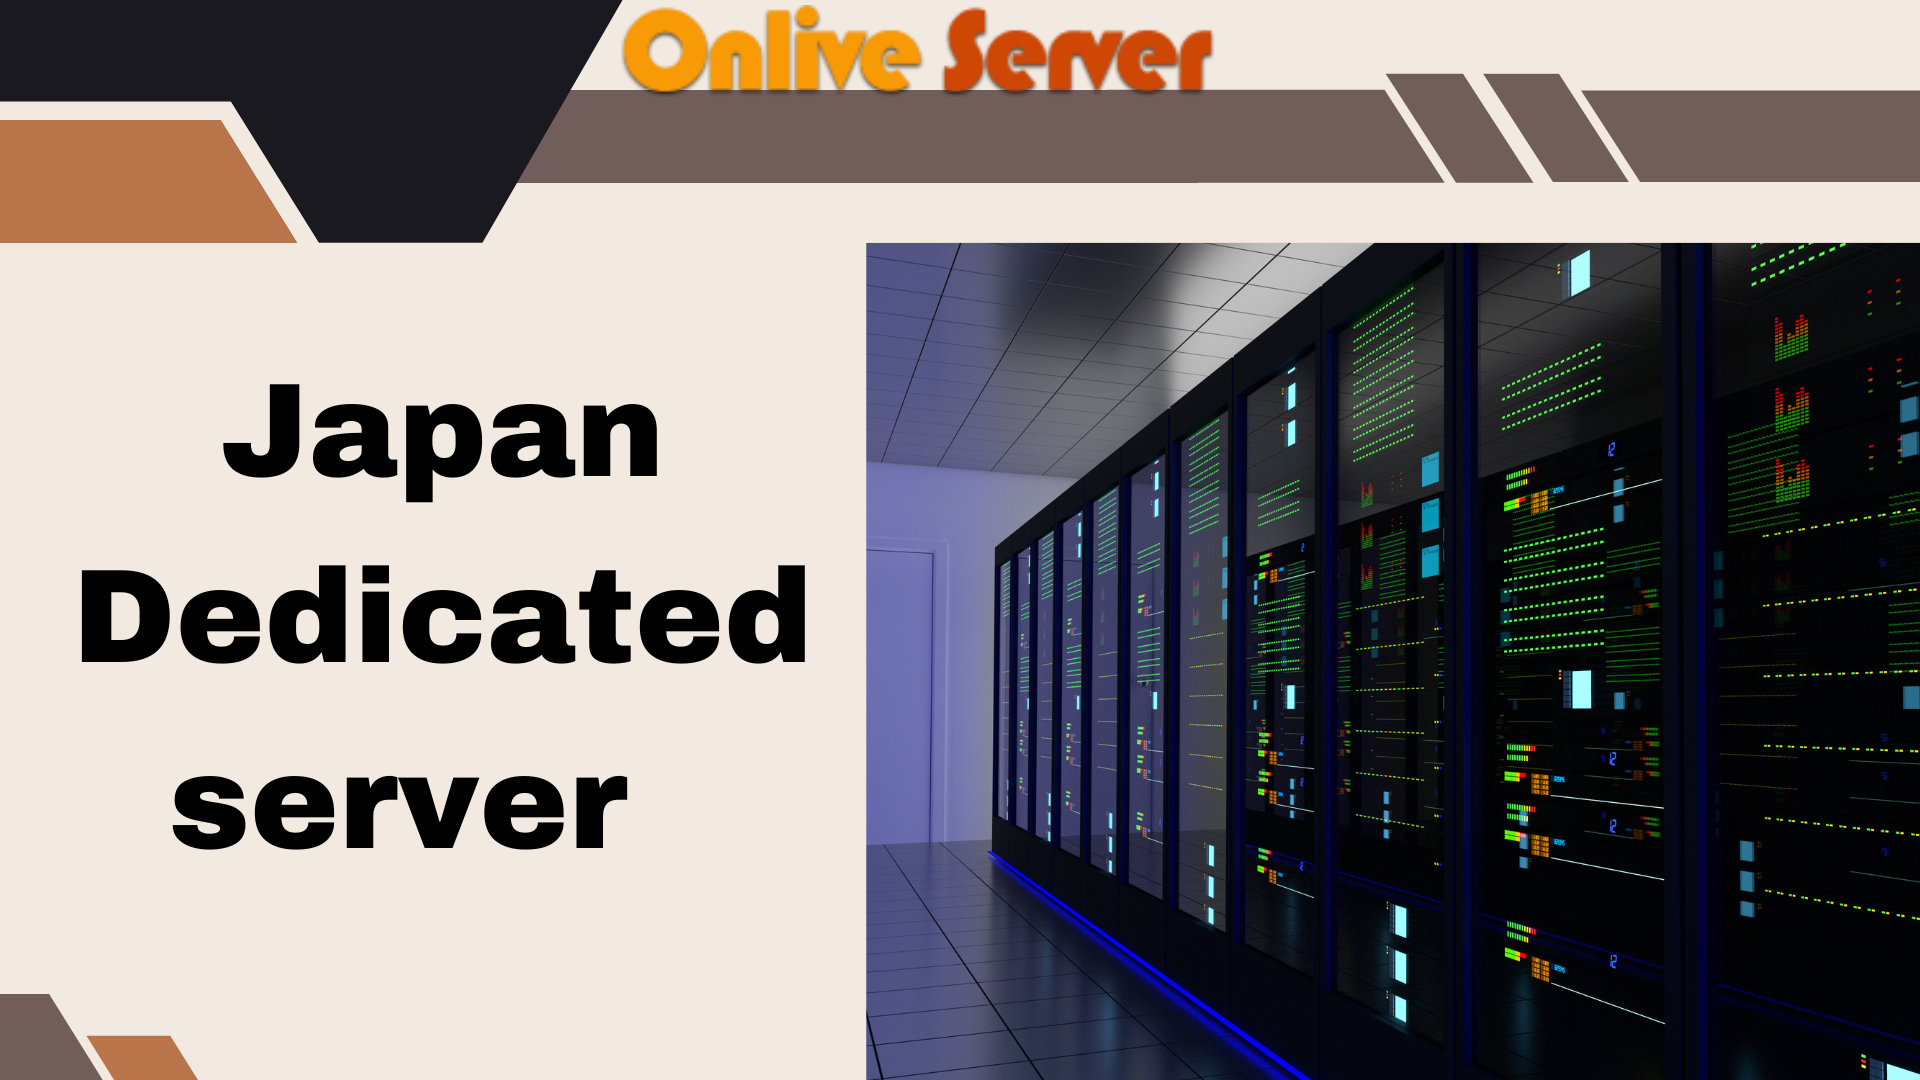 Japan Dedicated server